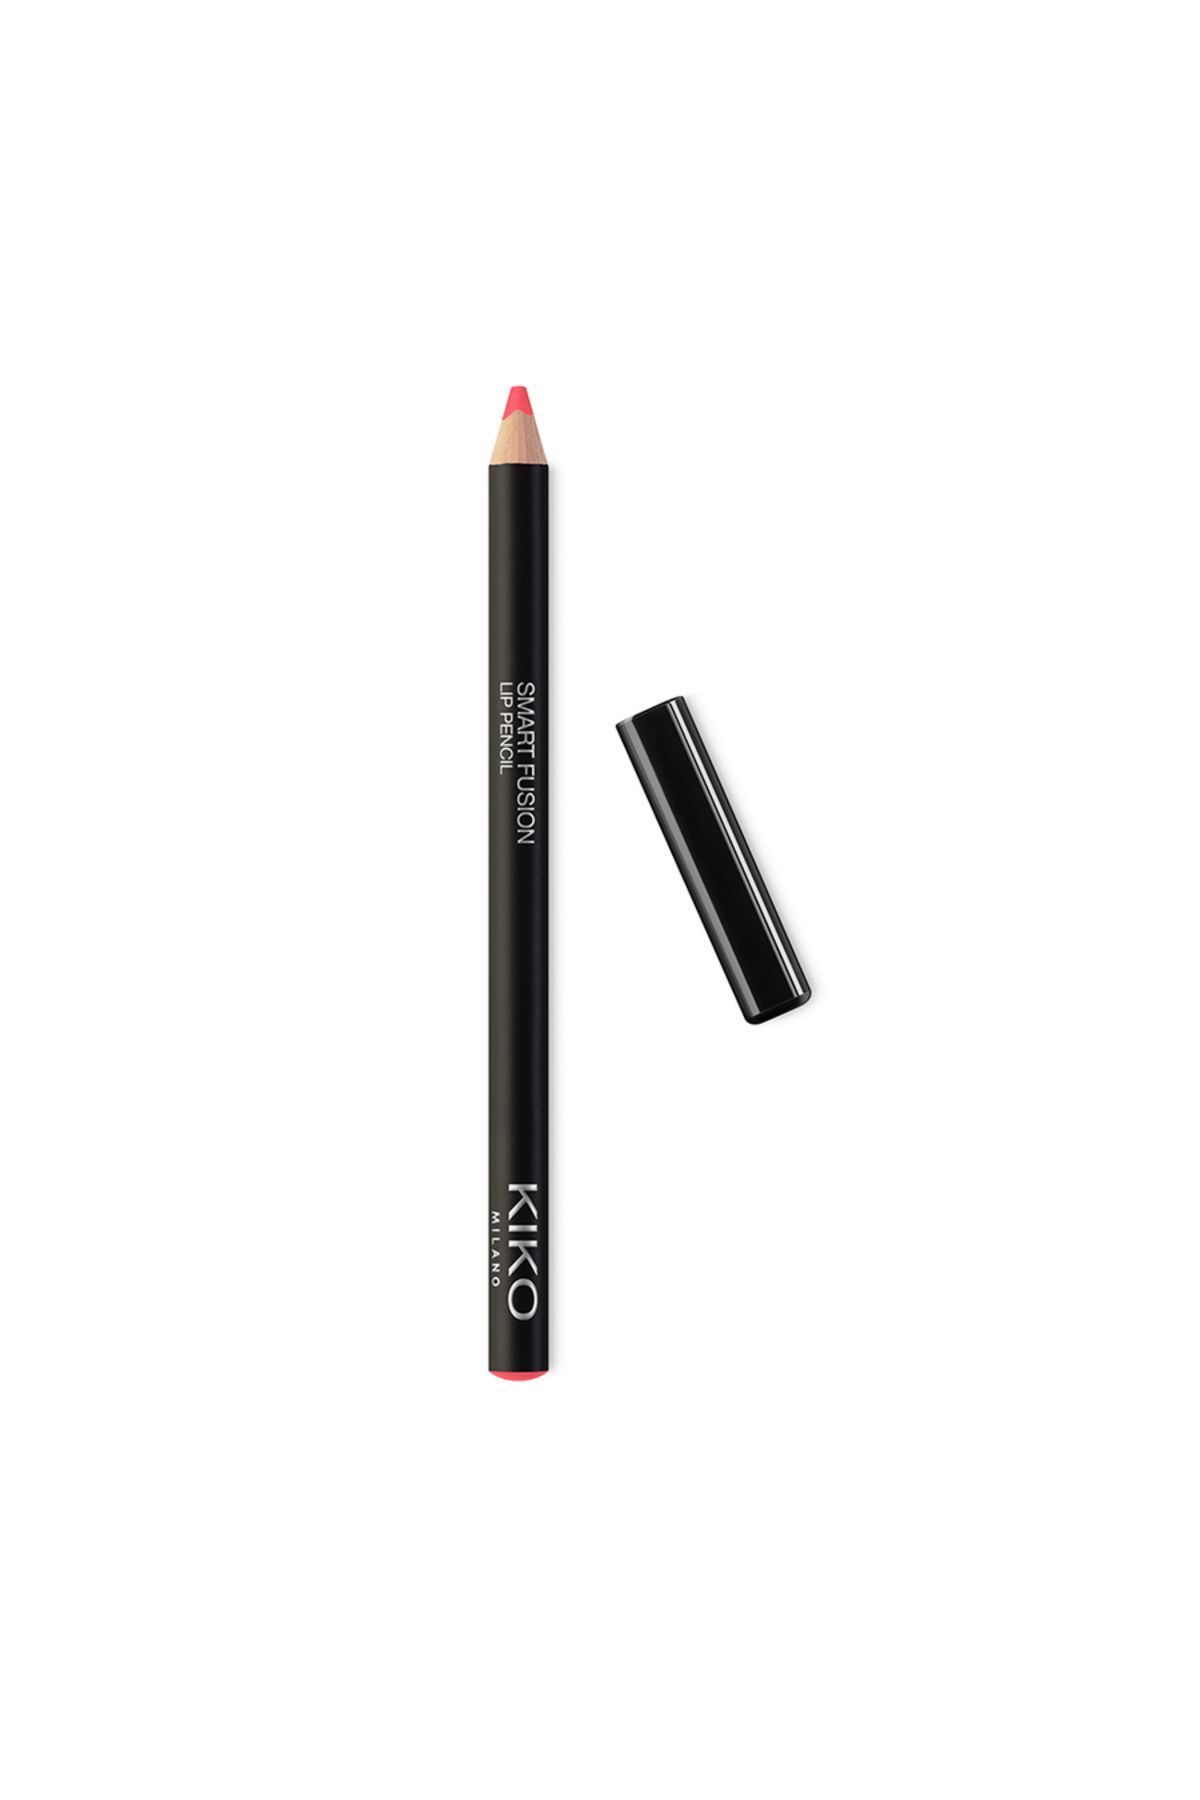 KIKO DUDAK KALEMİ - Smart Fusion Lip Pencil - 511 Coral